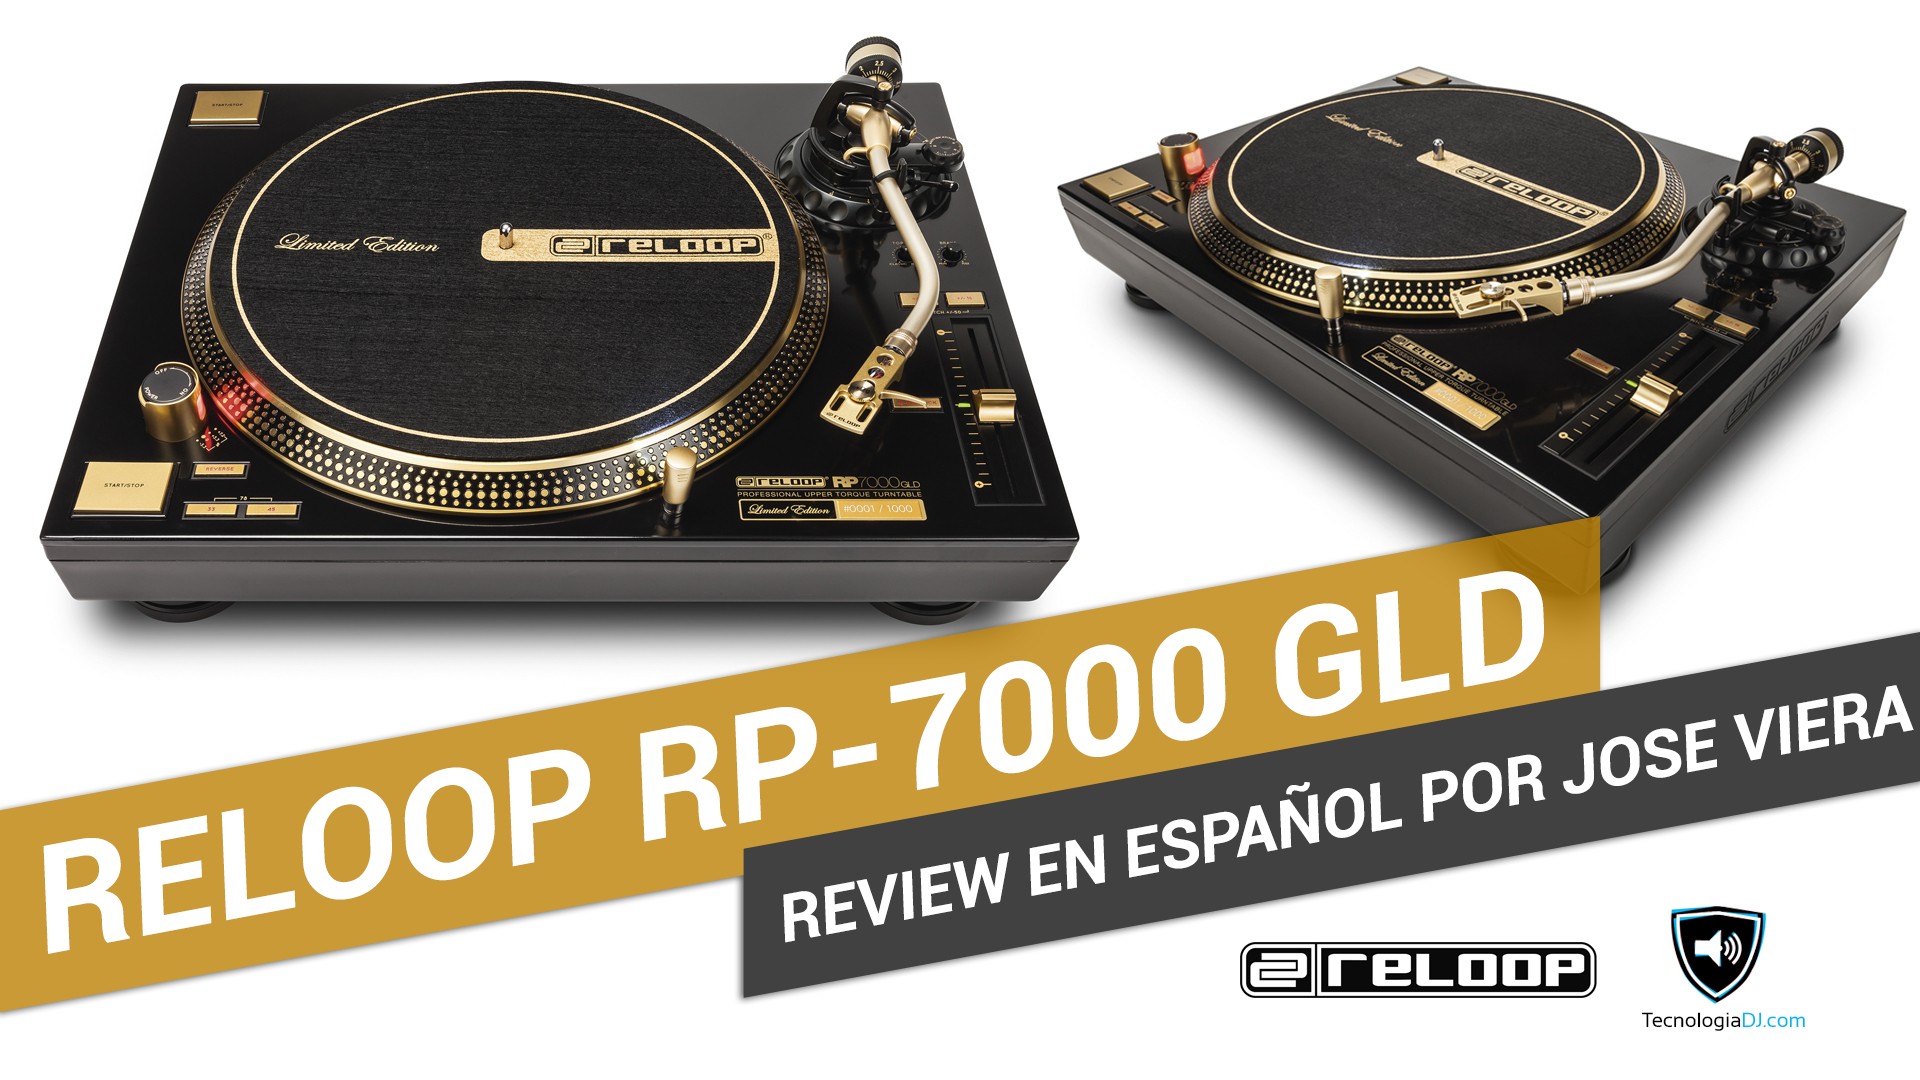 Review en español giradiscos Reloop RP-7000 GLD